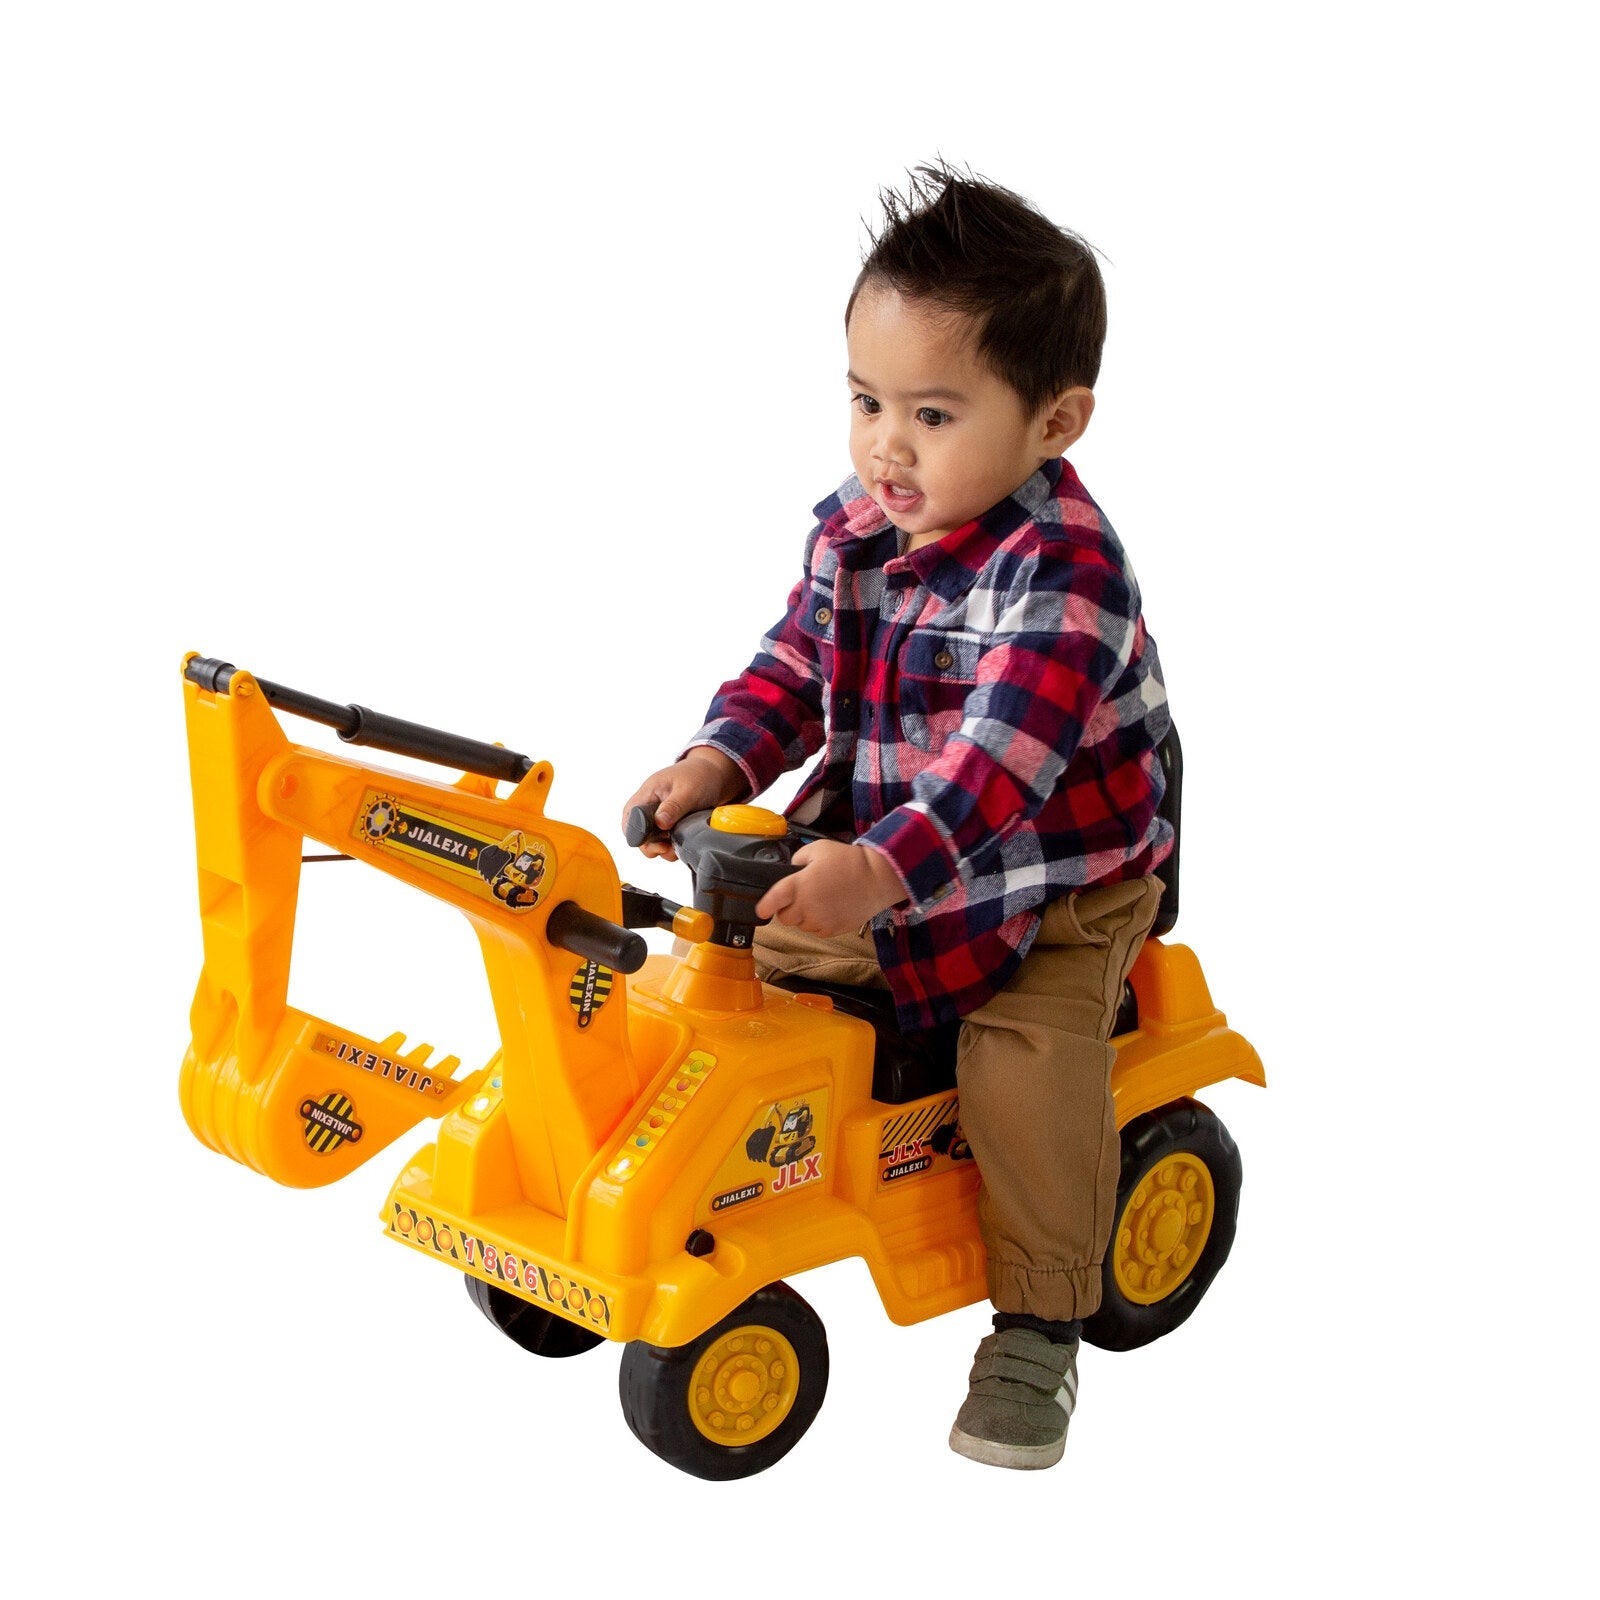 Ride-on Children’s Toy Excavator Truck (Yellow)